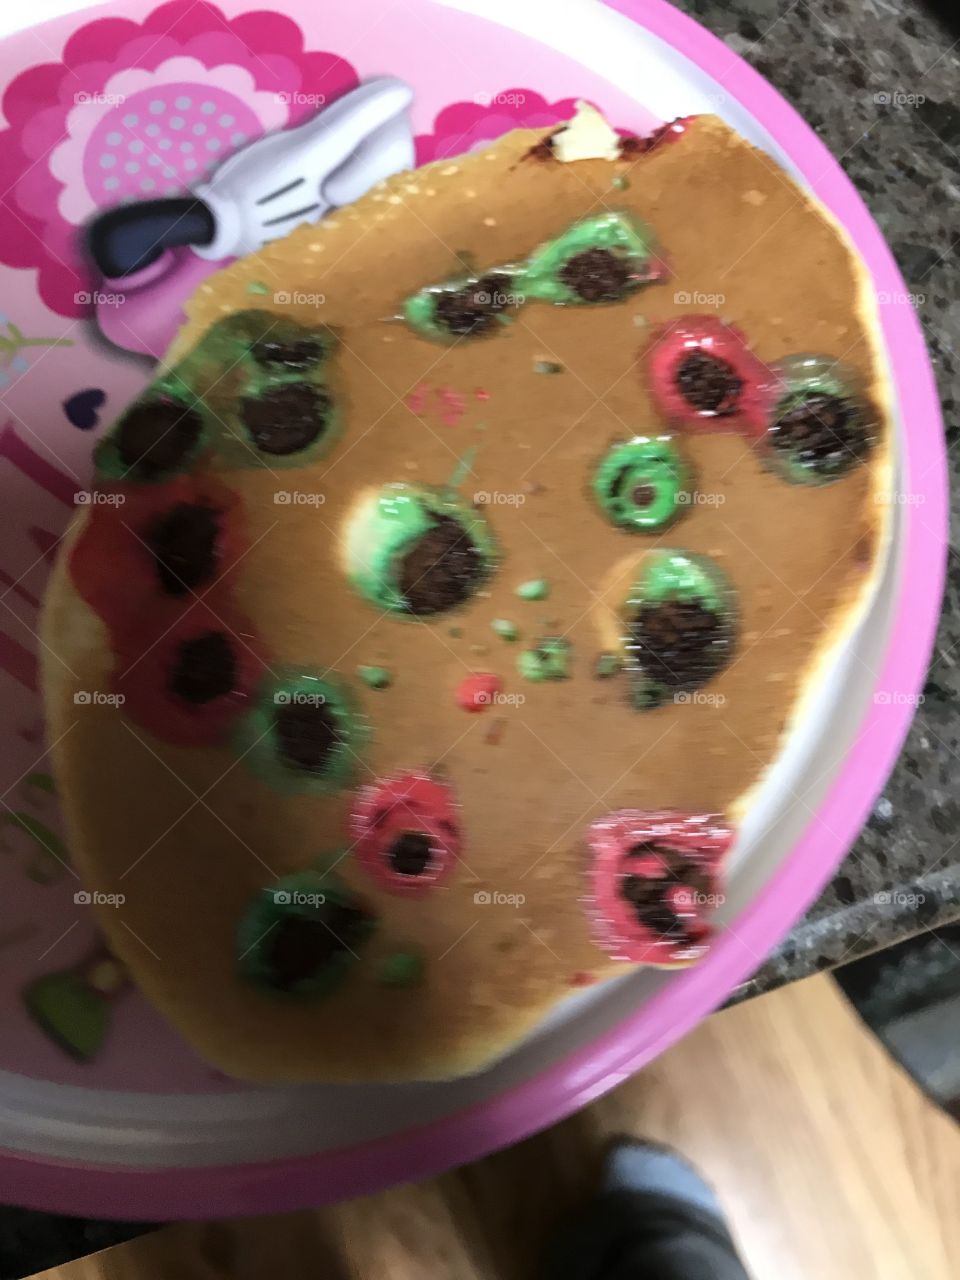 Candy pancake on pink plate